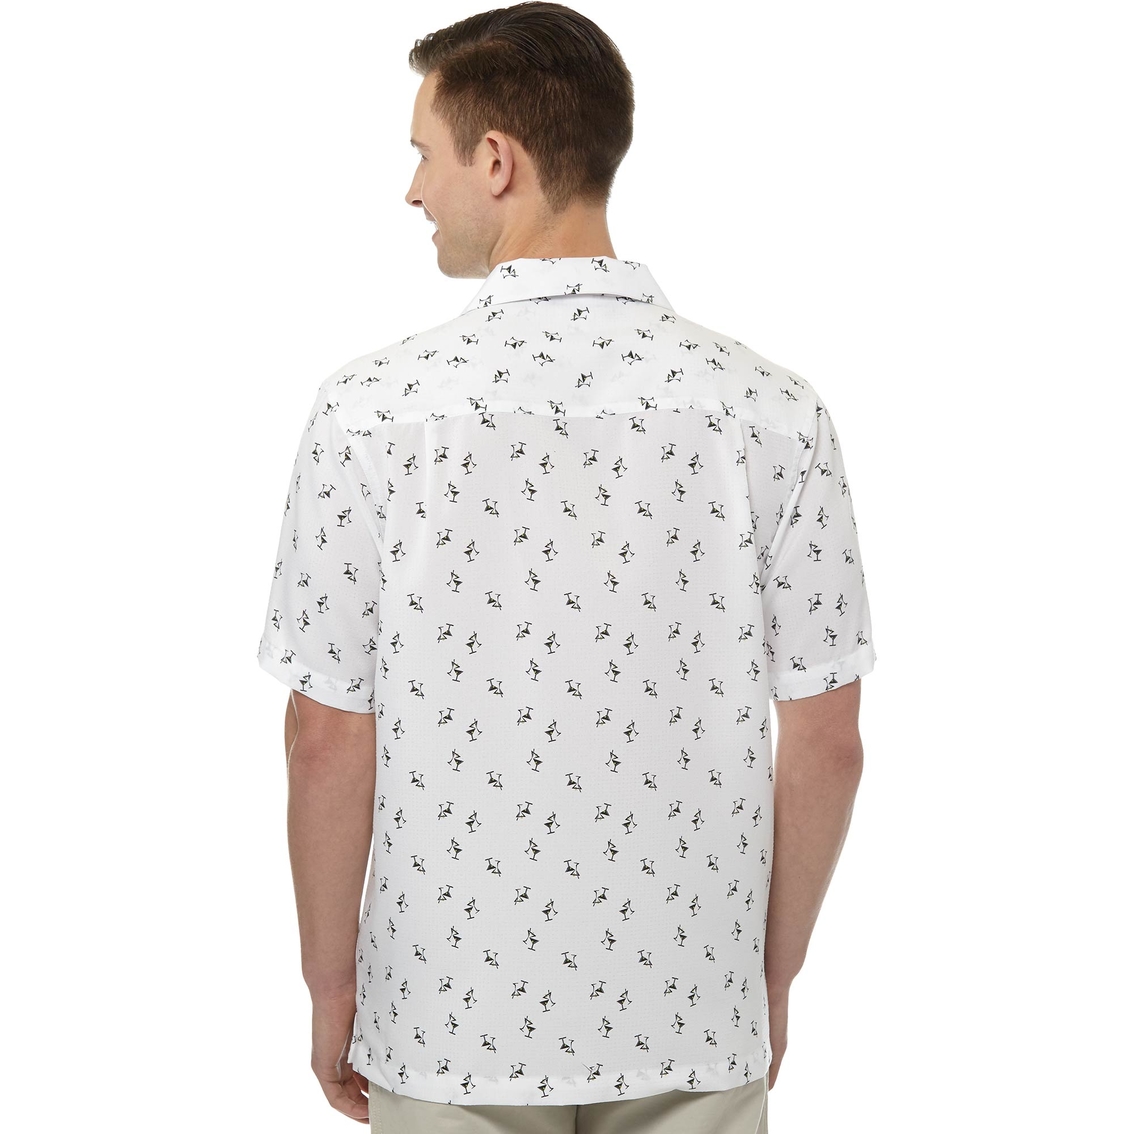 Haggar Printed Crinkle Shirt - Image 2 of 3